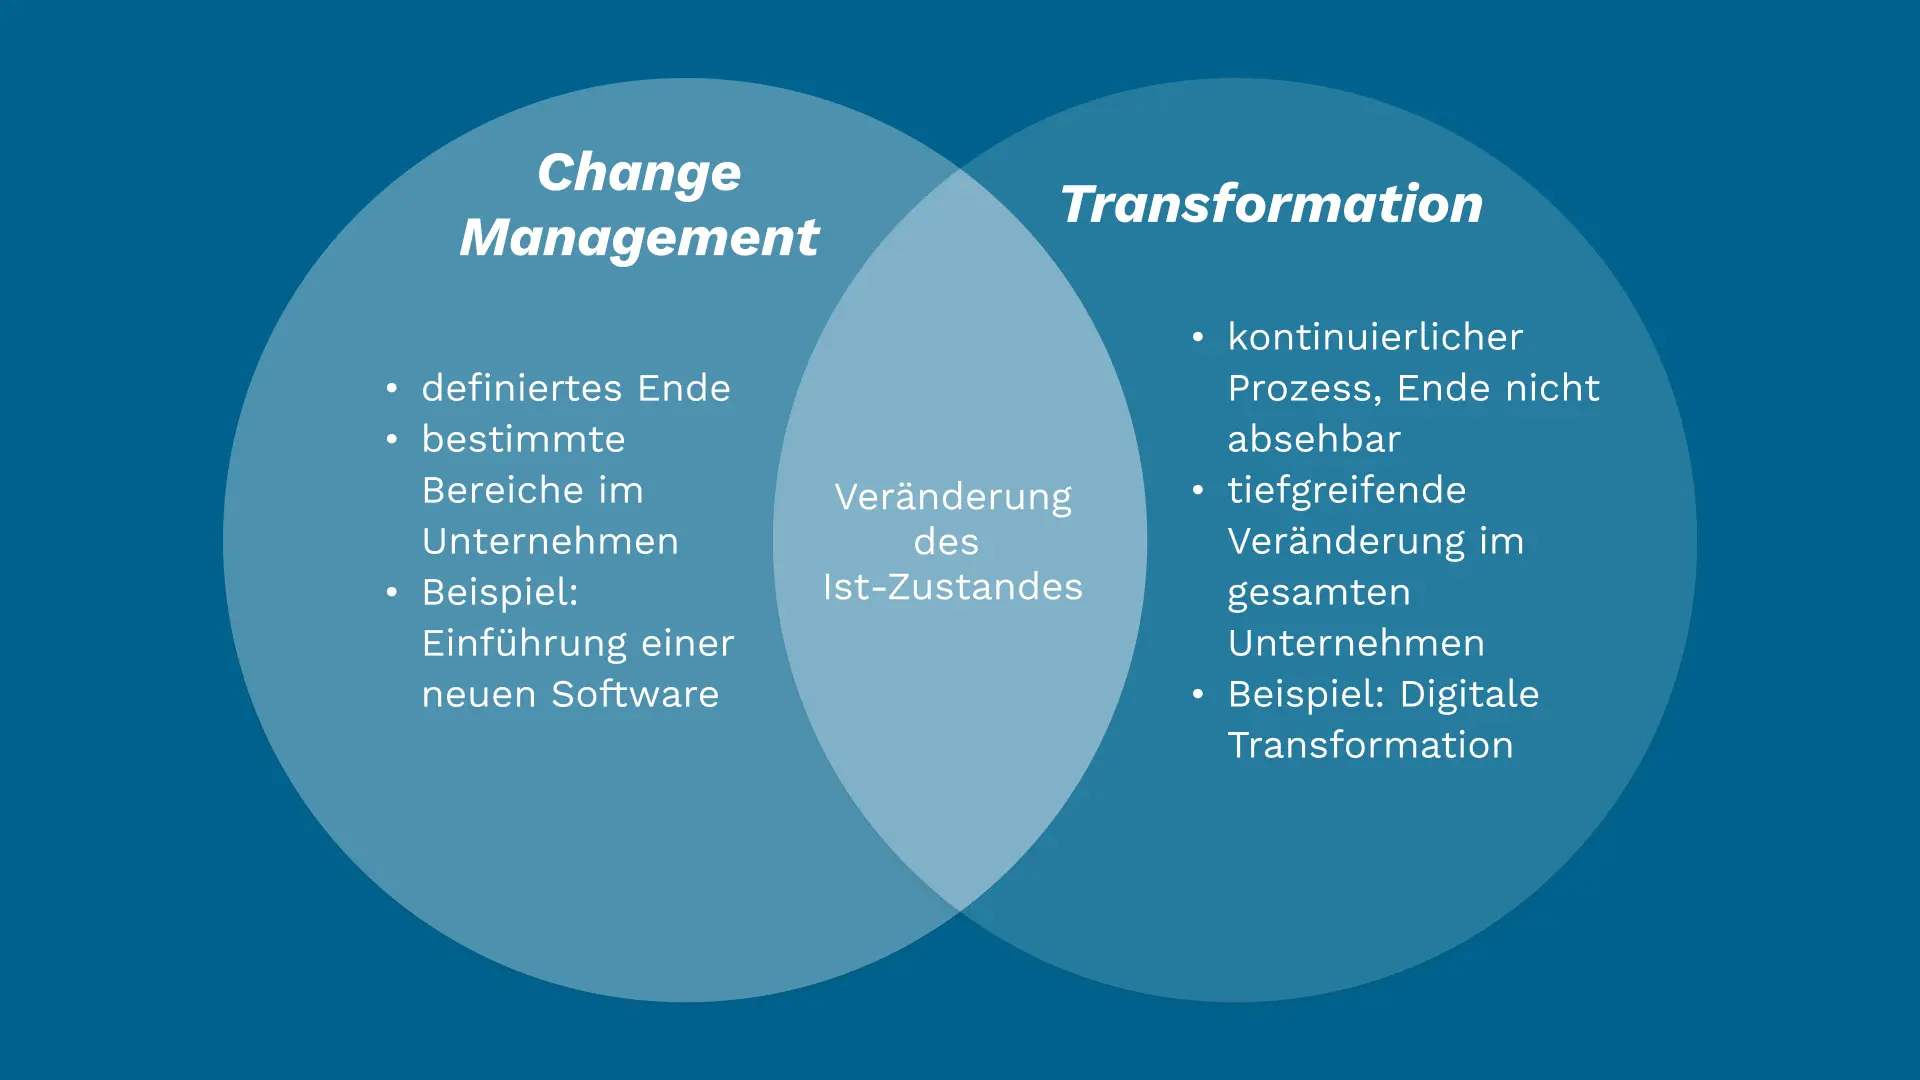 Change Management vs Transformation